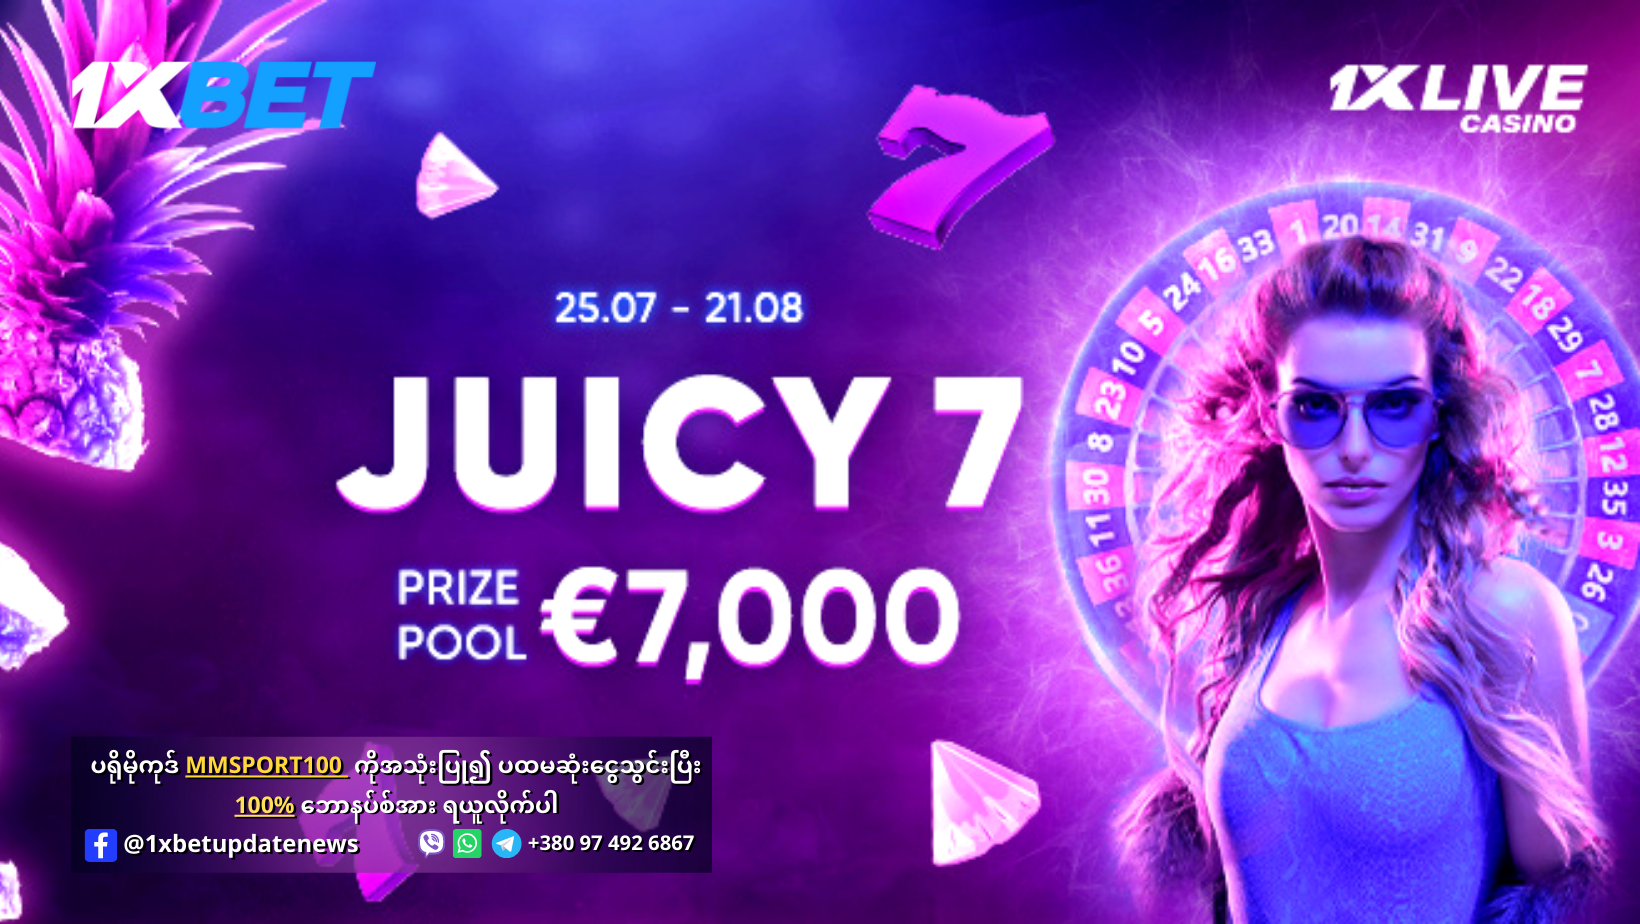 Juicy 7 Promotion